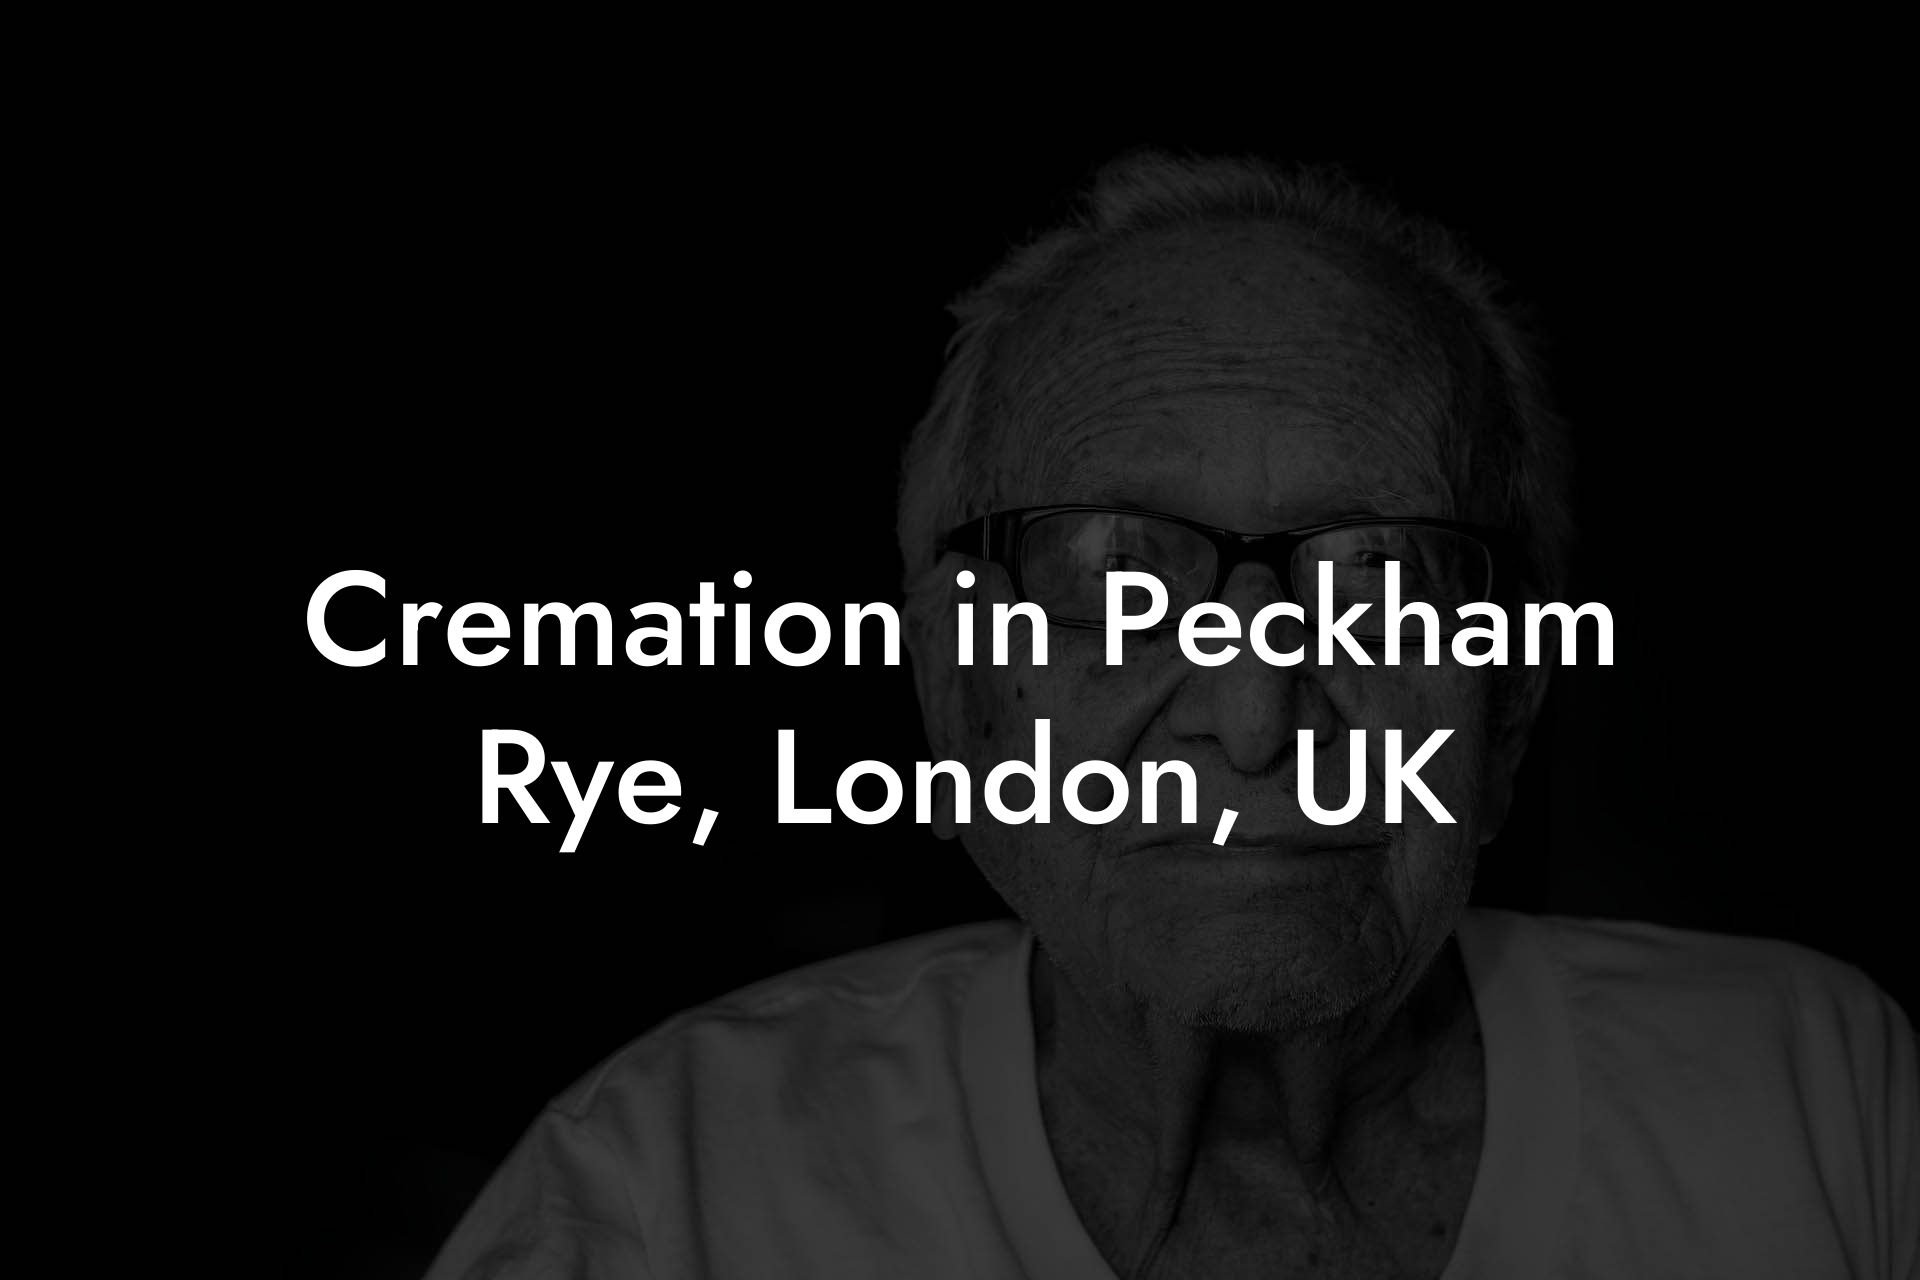 Cremation in Peckham Rye, London, UK